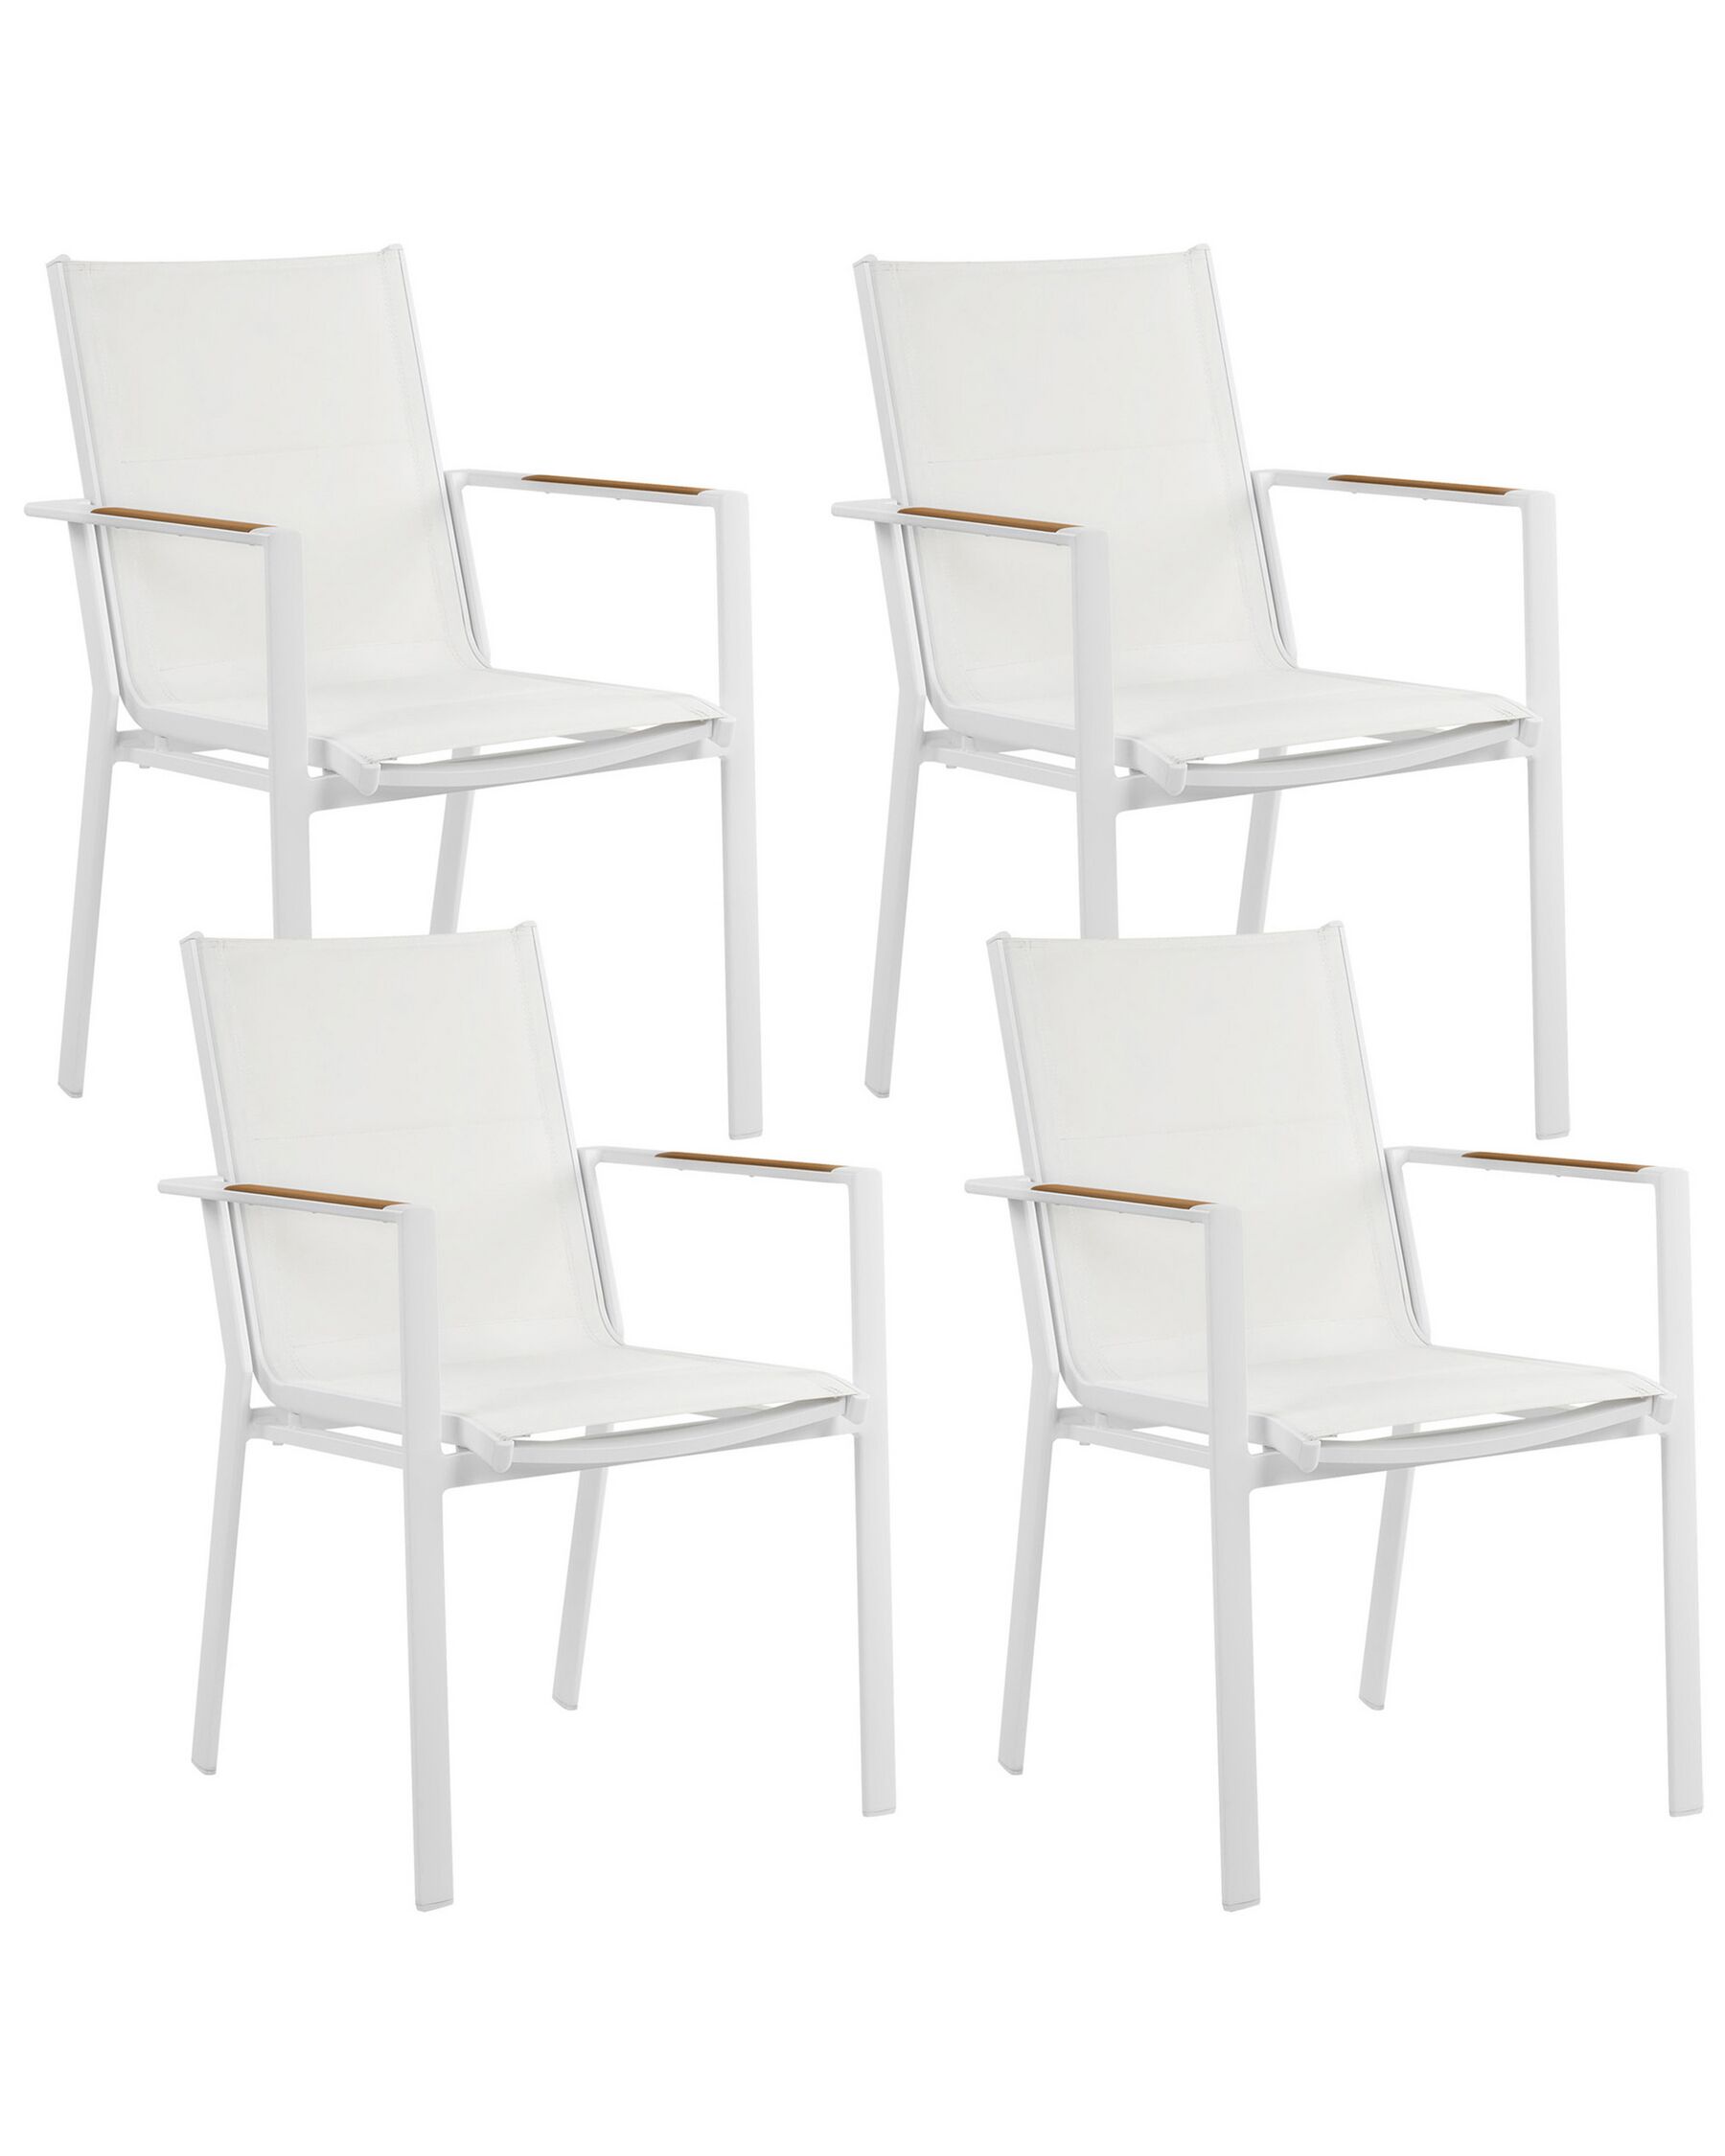 Set of 4 Garden Chairs White BUSSETO_922744